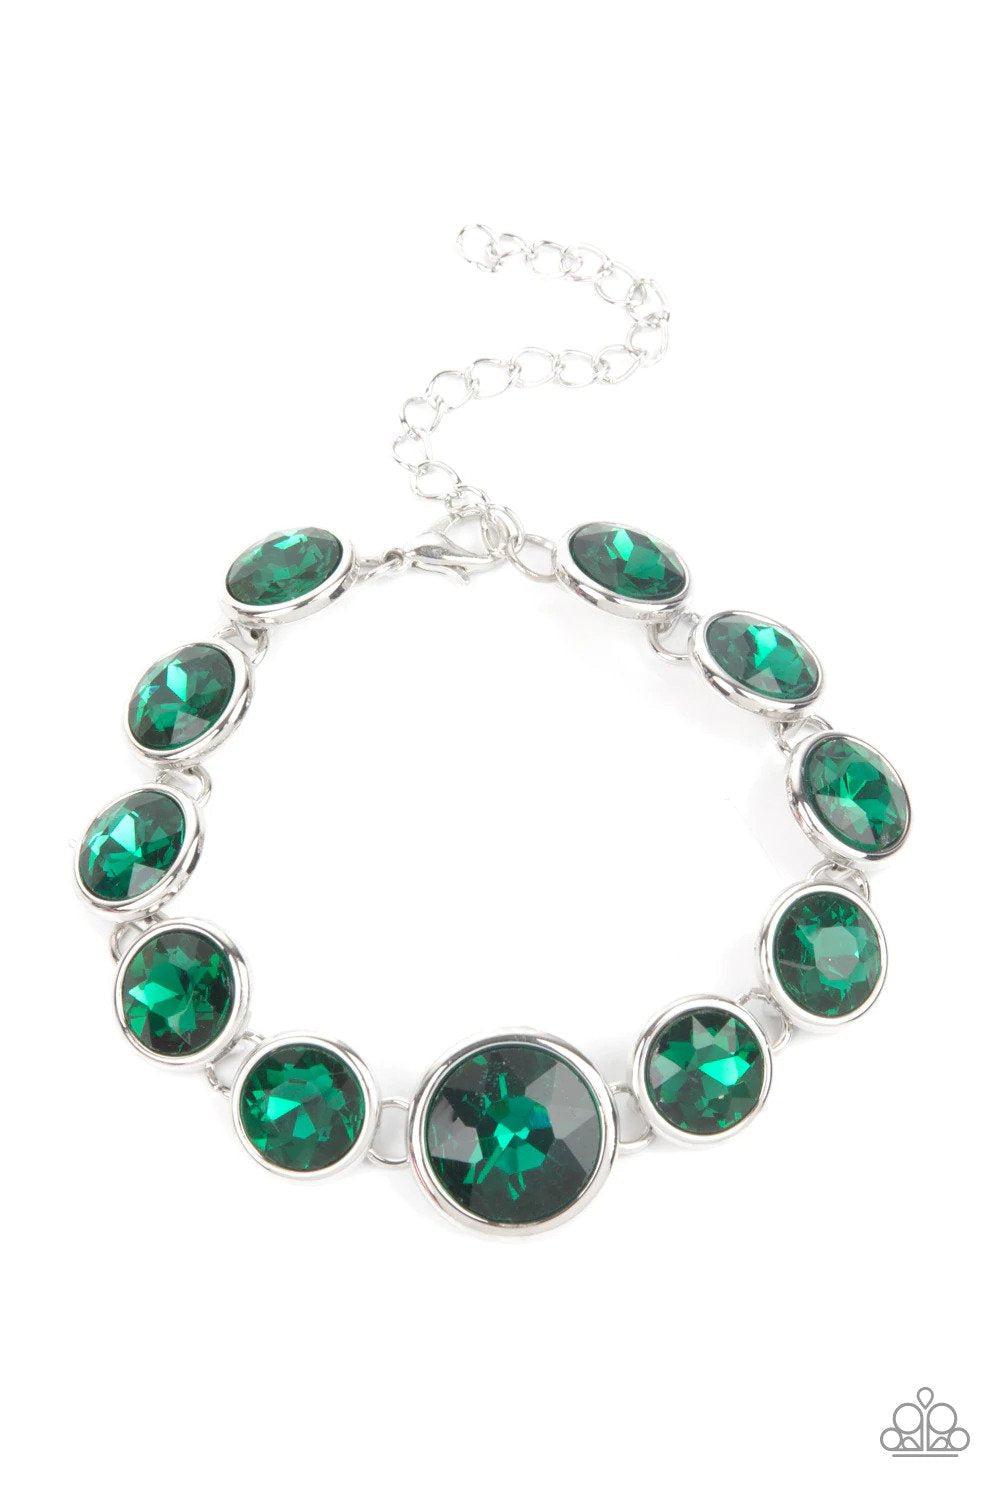 Lustrous Luminosity Green Bracelet - Paparazzi Accessories- lightbox - CarasShop.com - $5 Jewelry by Cara Jewels